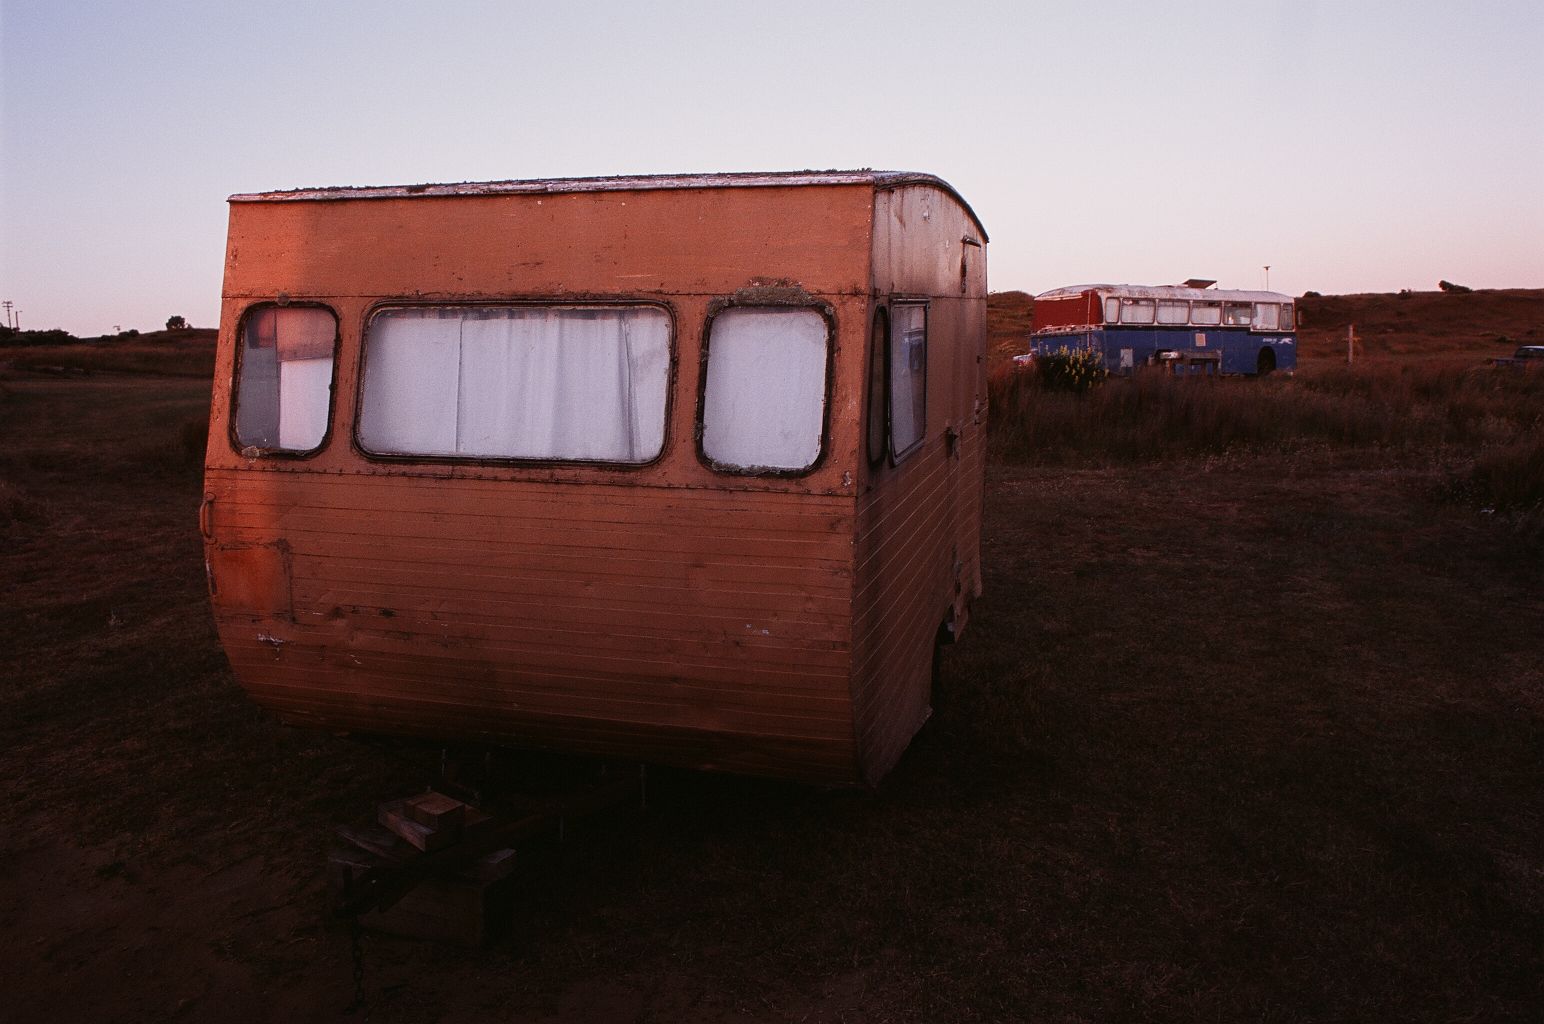 fotka / image informal campsite na Waiia beach, z Aucklandu do Wellingtonu